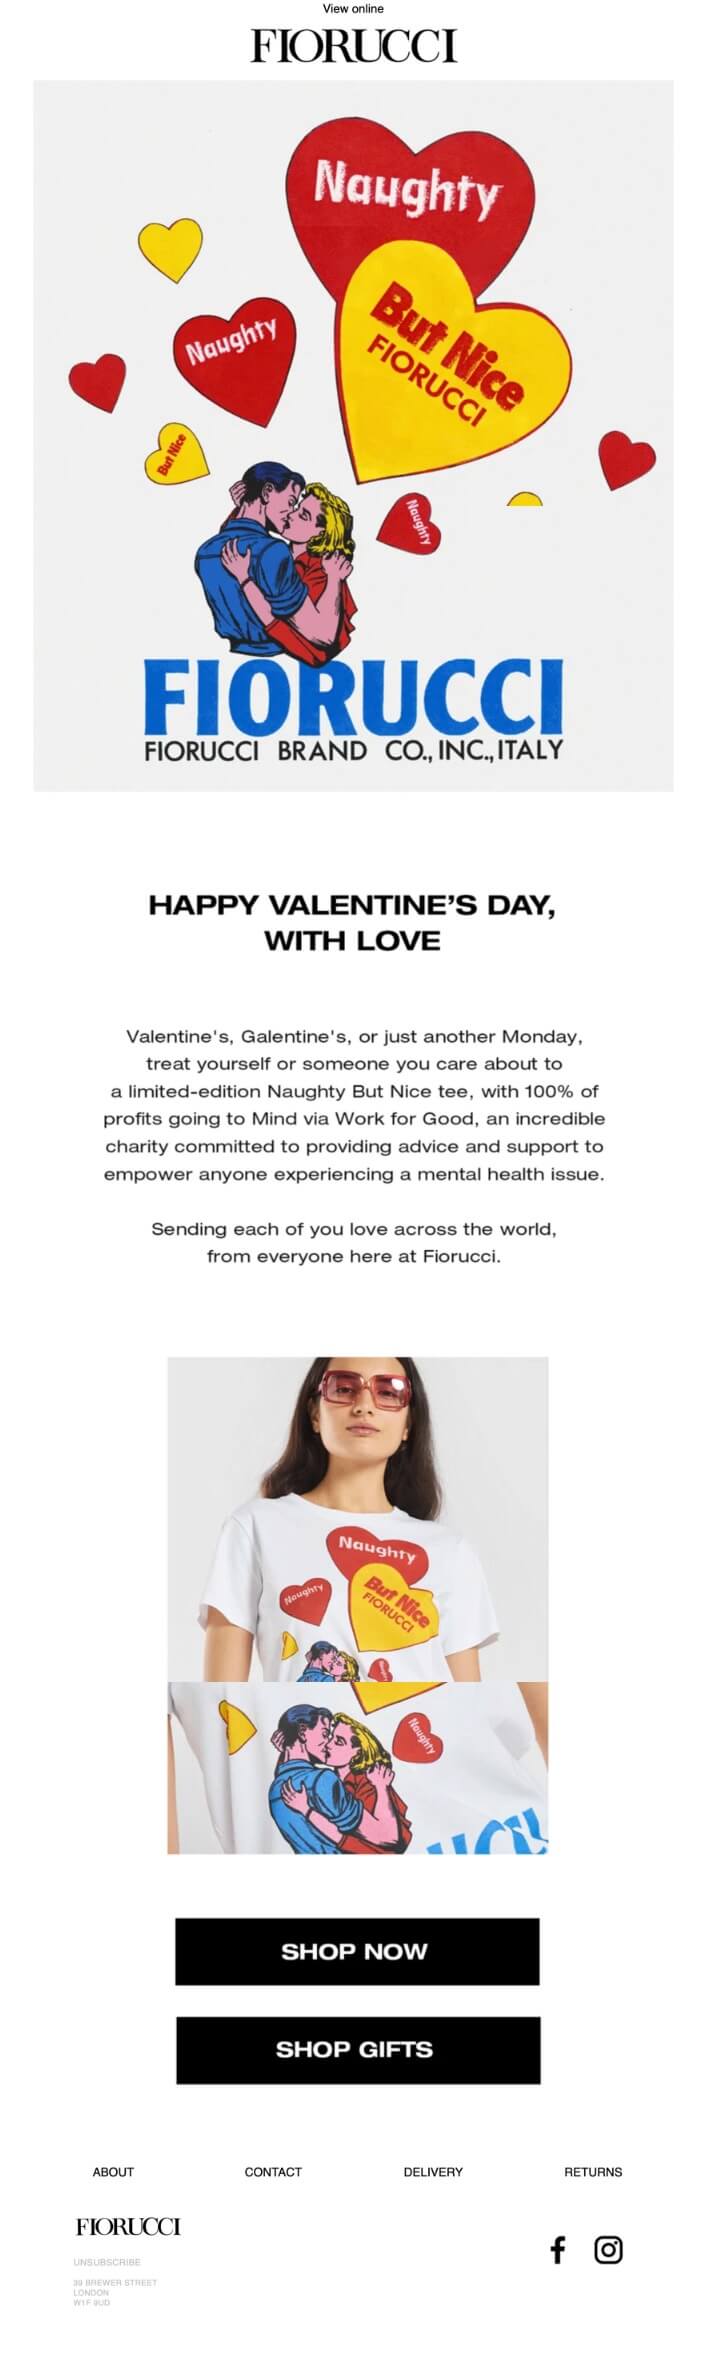 A Fiorucci Valentine’s email